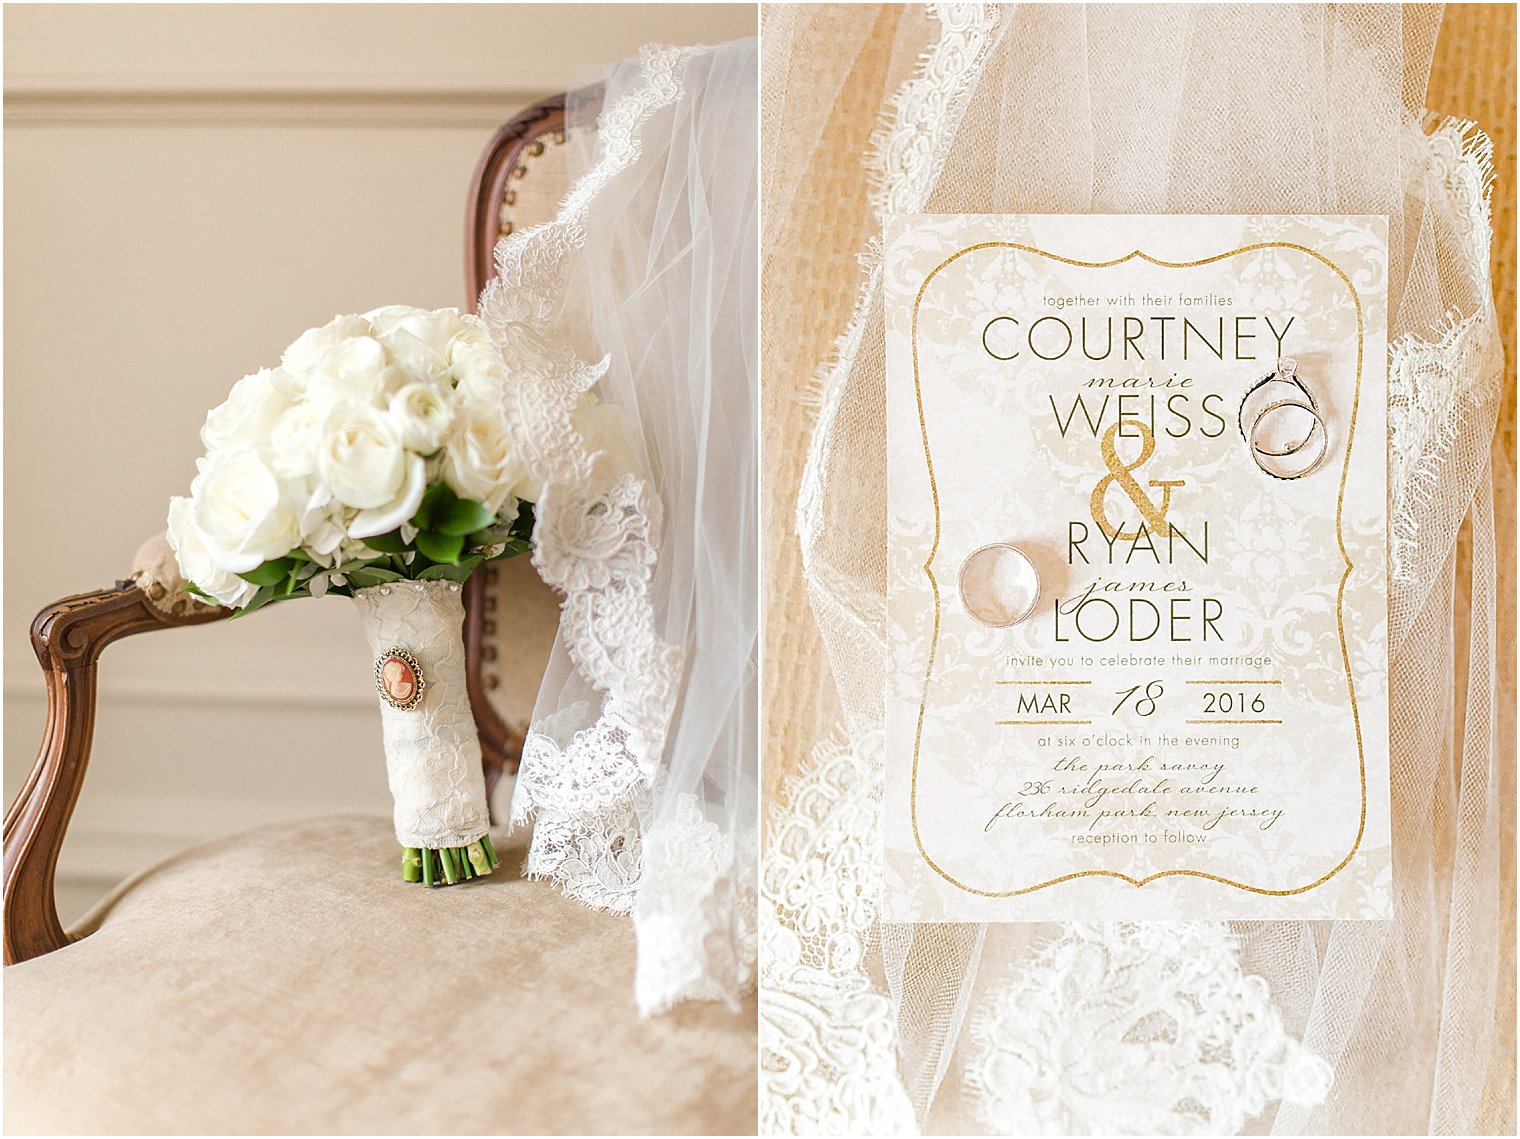 Wedding bouquet by Yumila Weddings and Events | Invitations by Wedding Paper Divas | Sarah Hawkins Designs